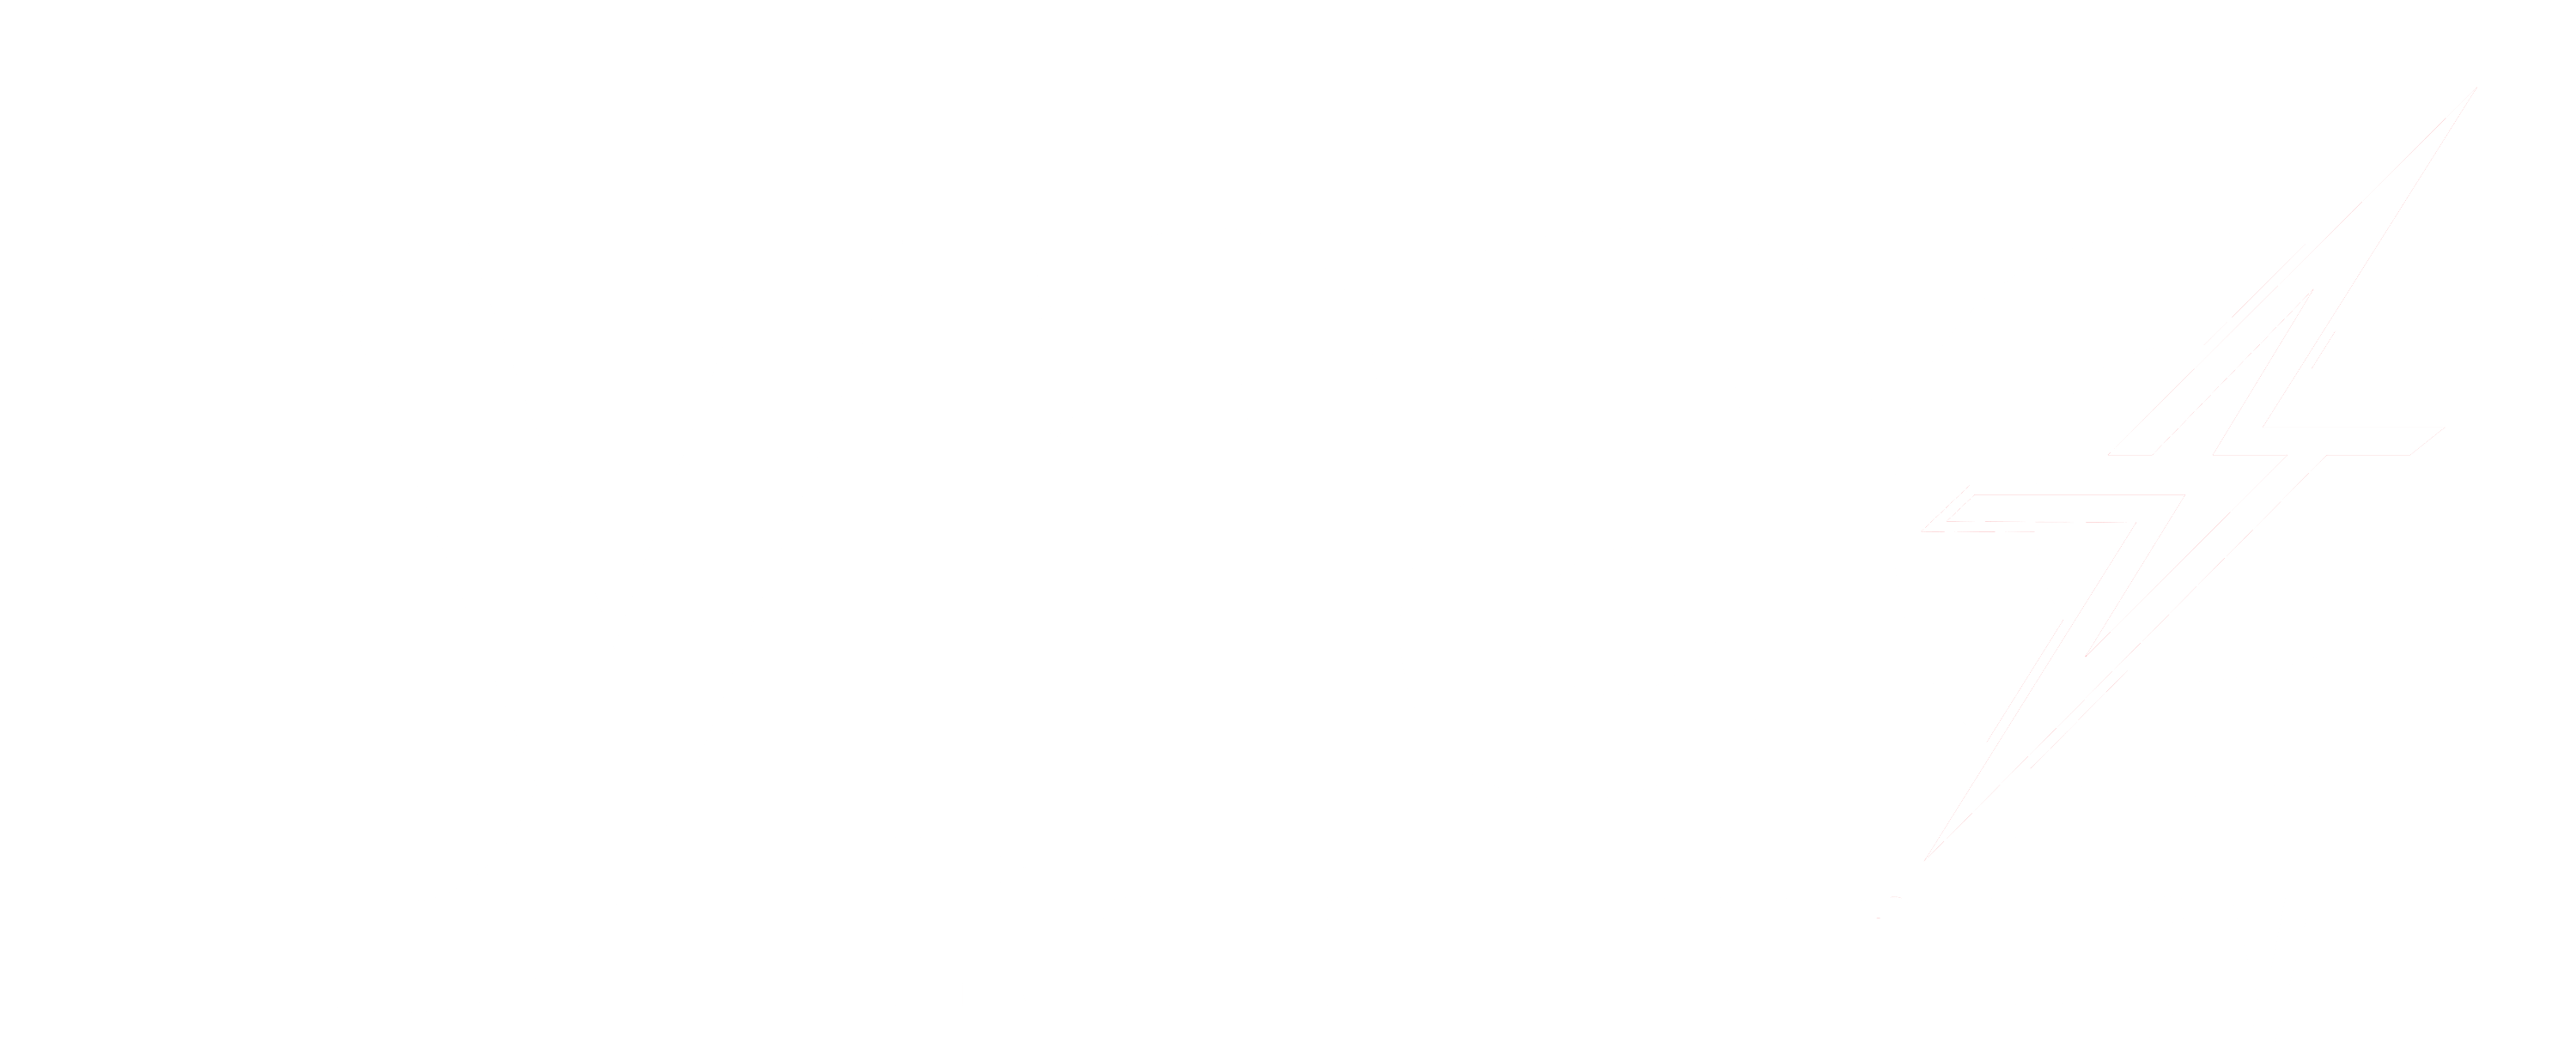 NEW Lynac Logo White